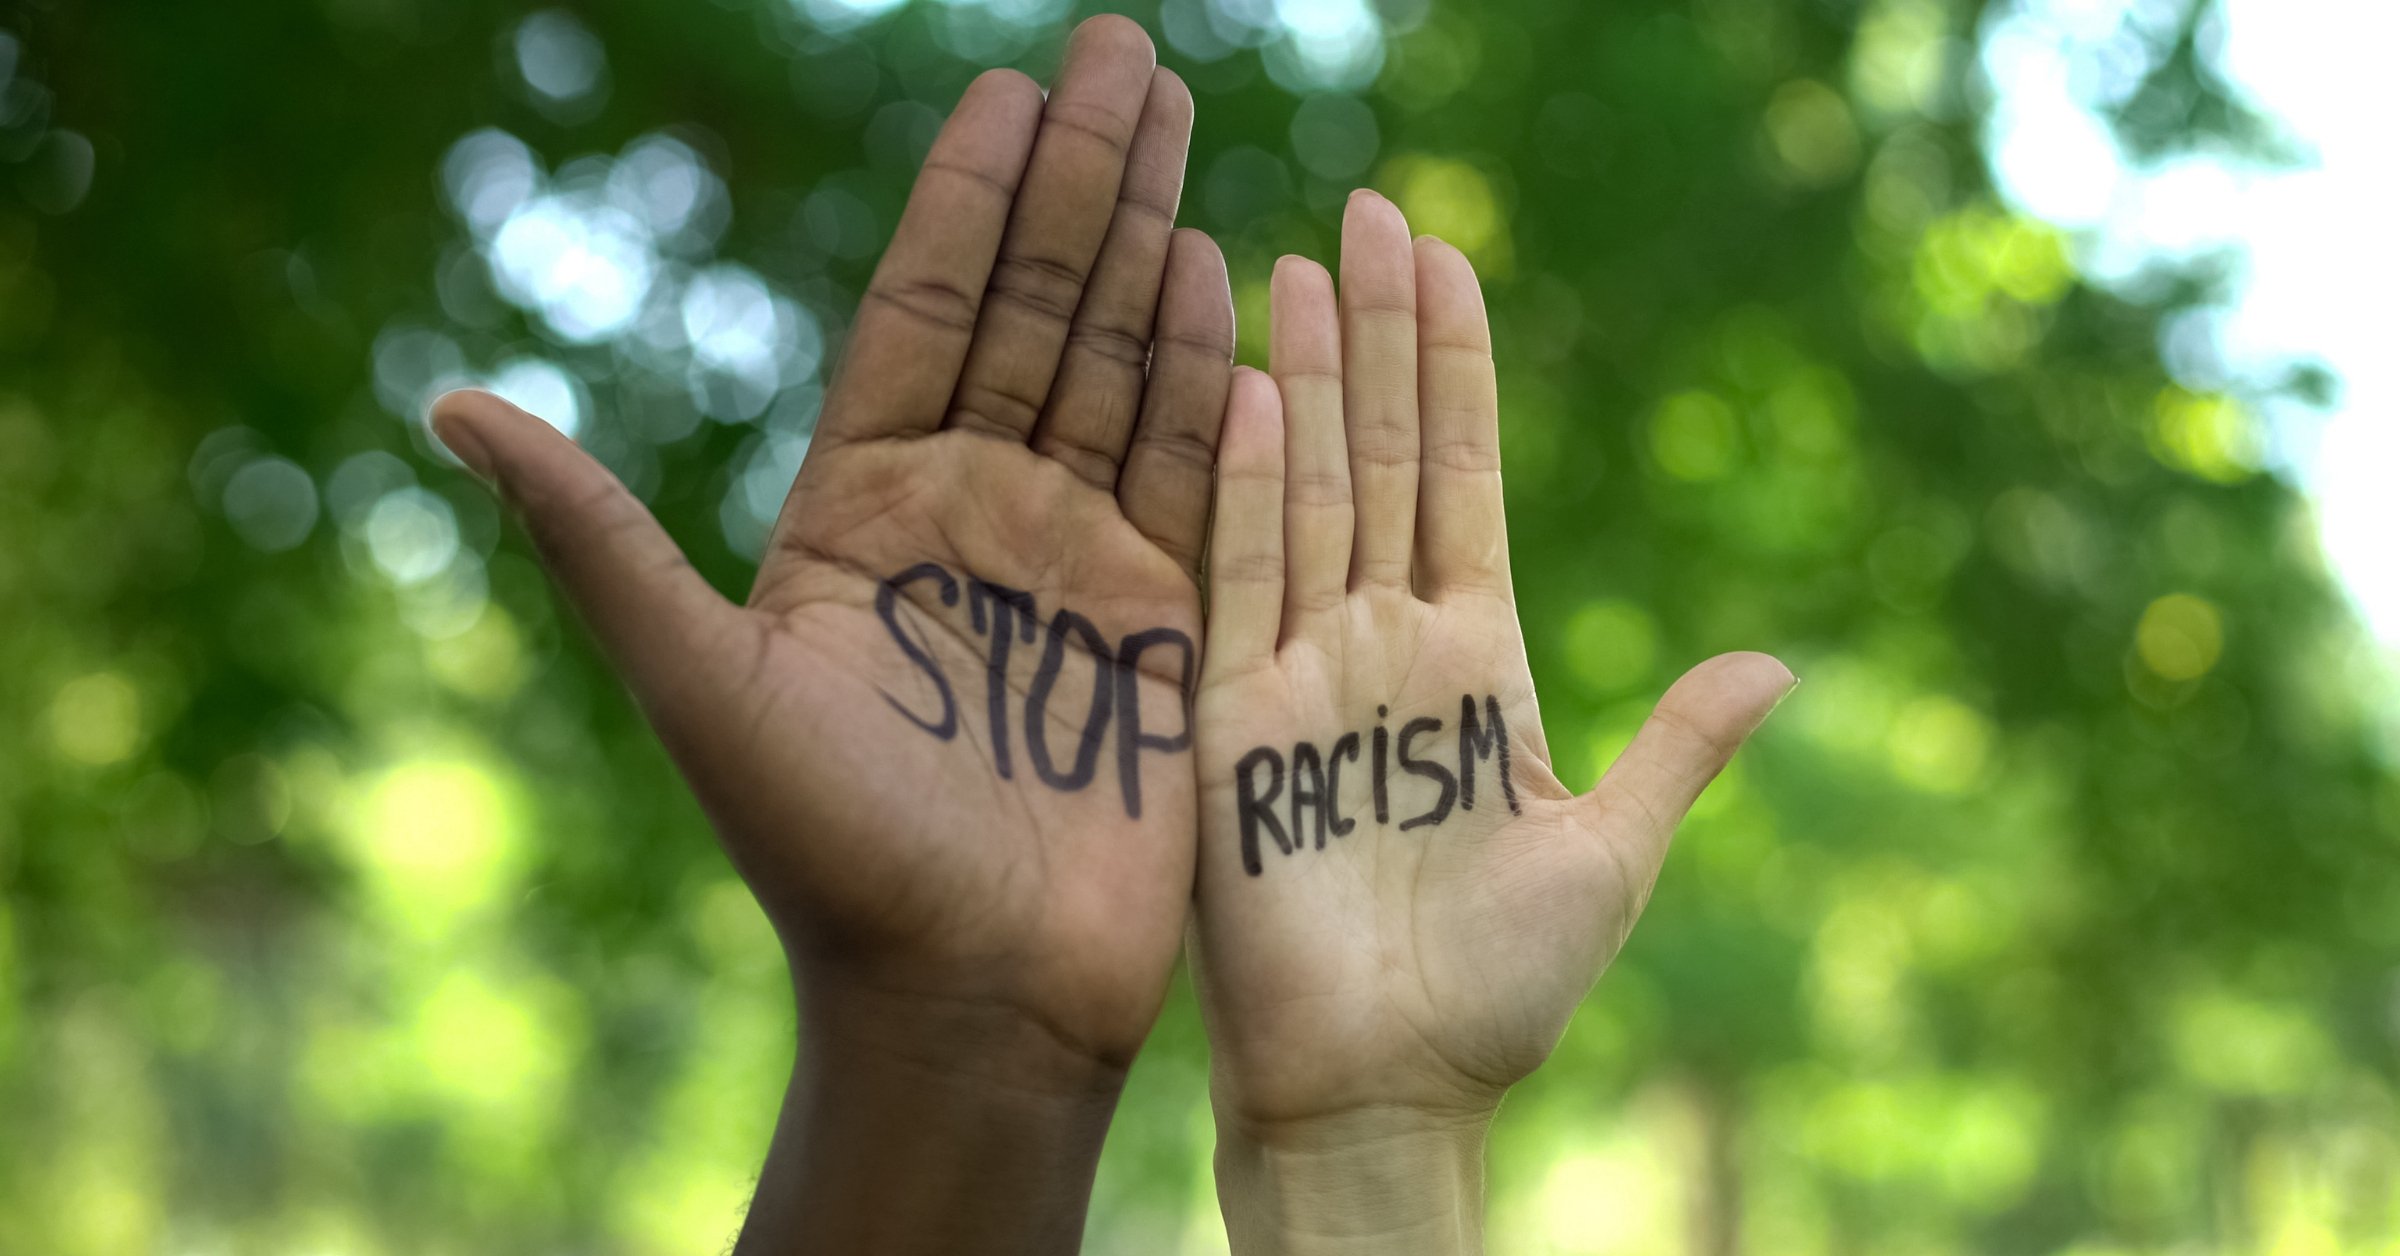 Response to Racism